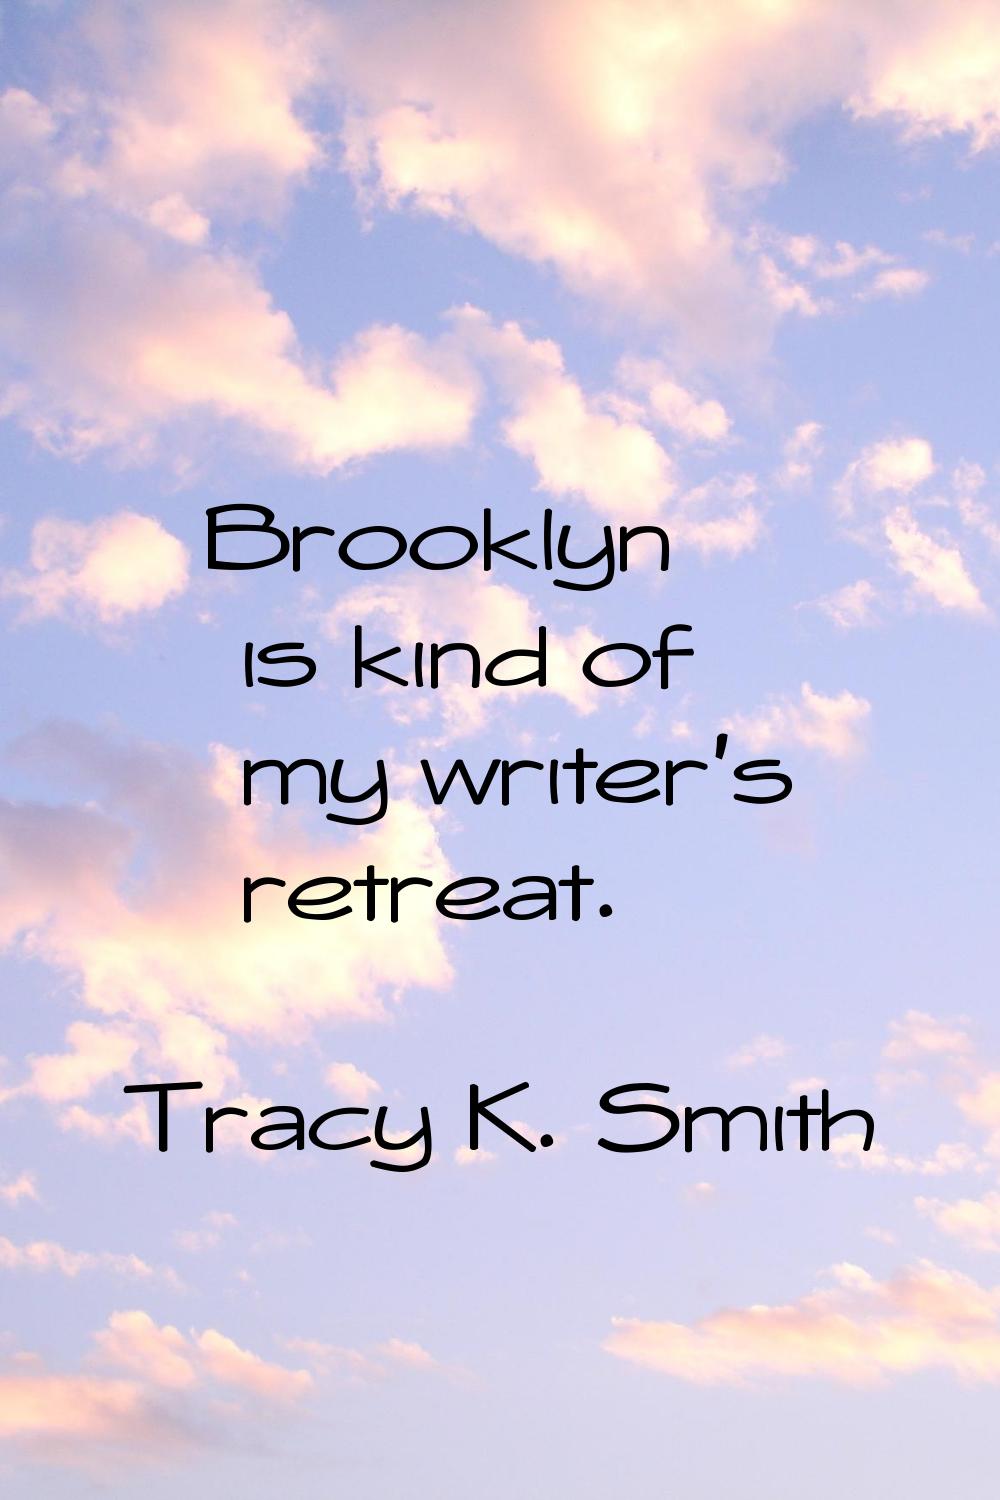 Brooklyn is kind of my writer's retreat.